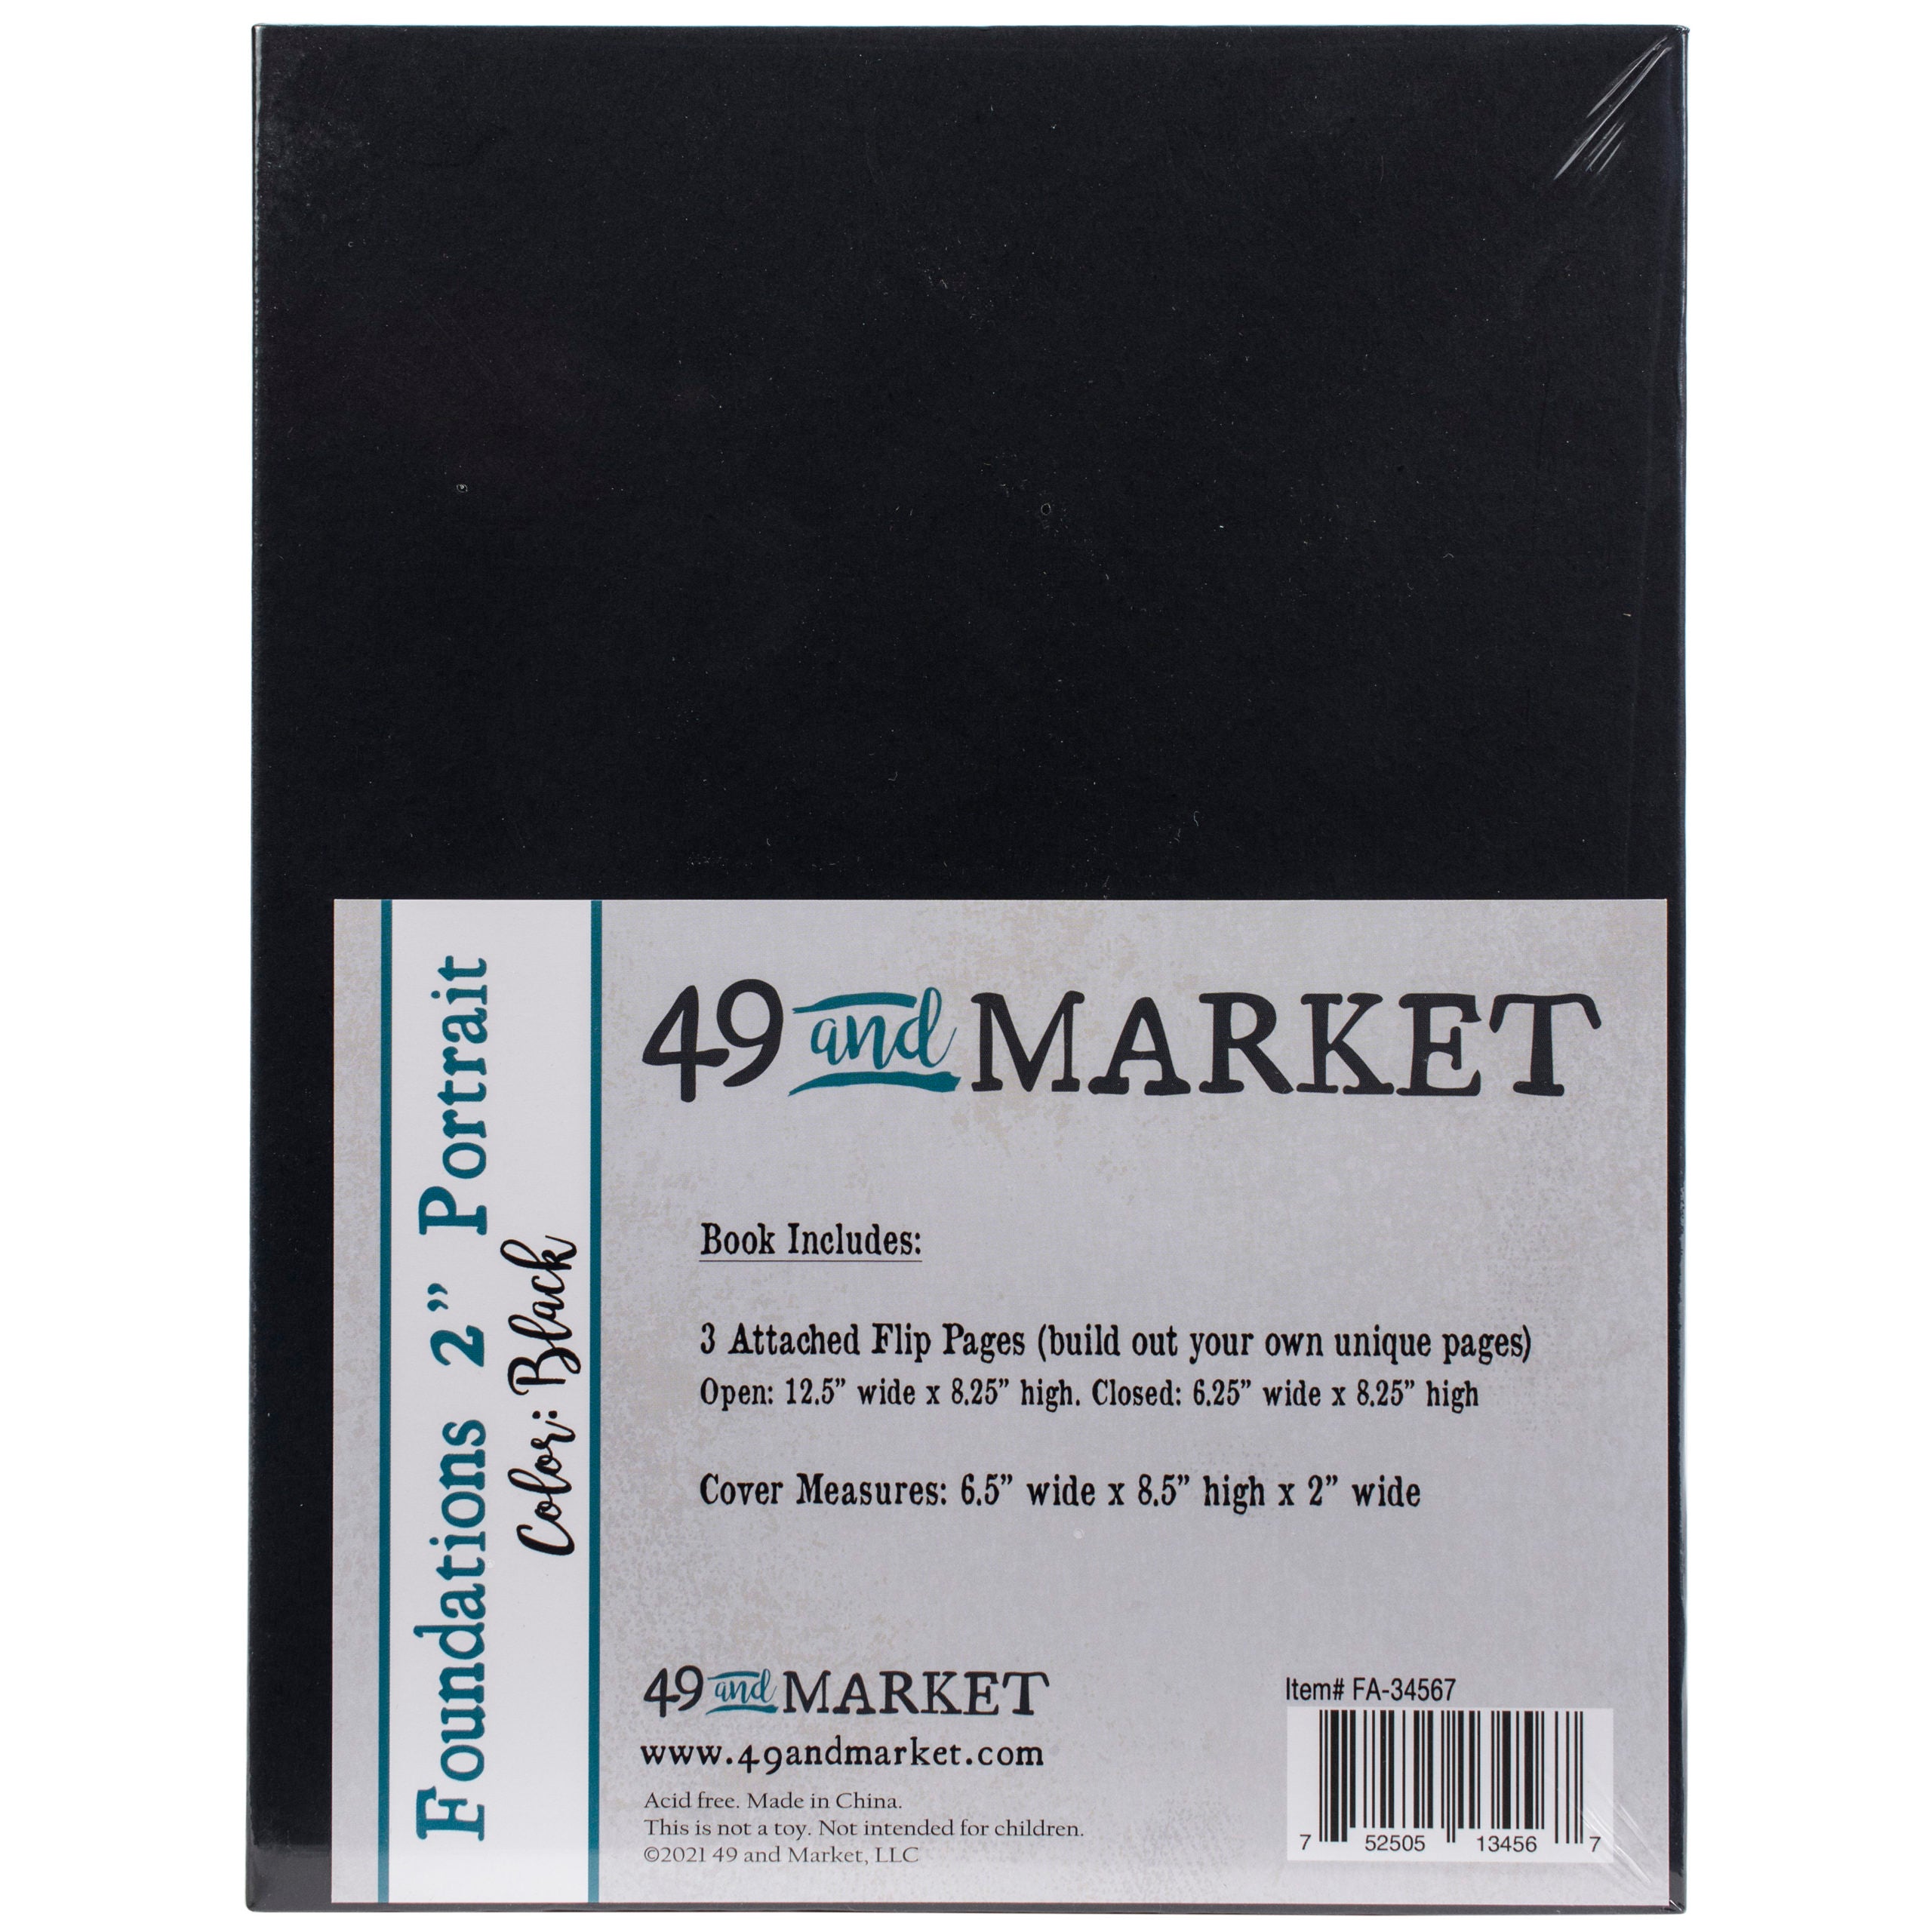 49 and Market Foundation black album